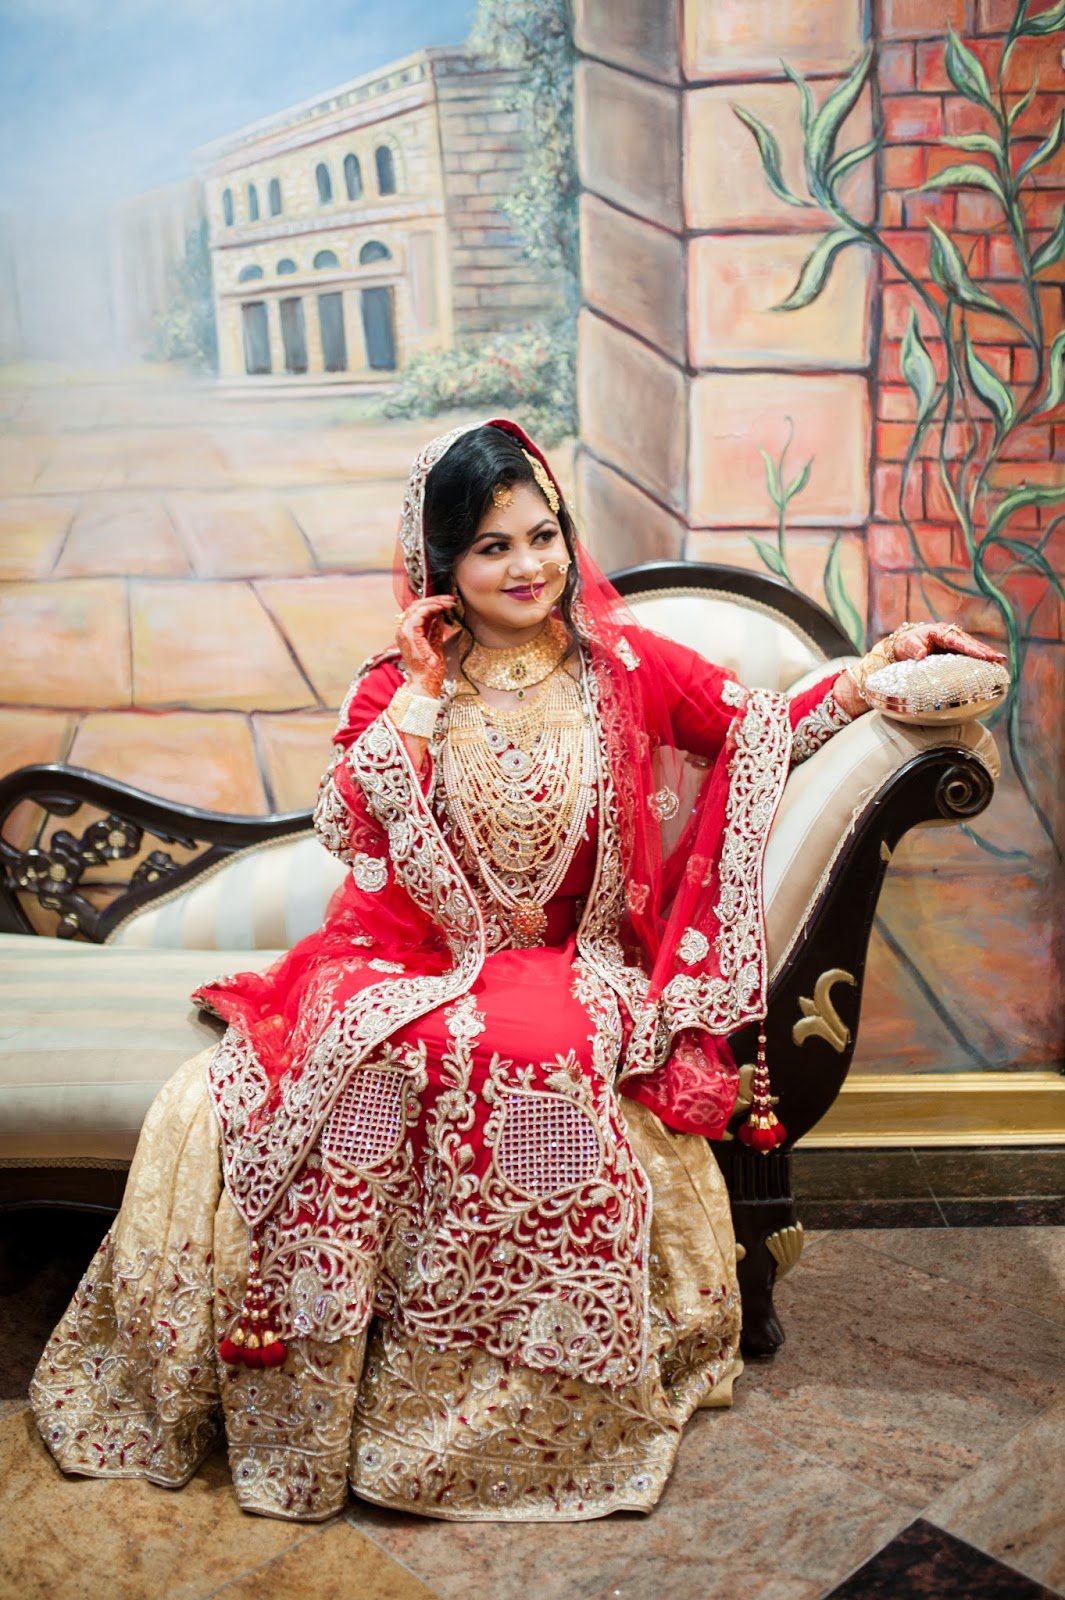 Indian wedding photography ideas